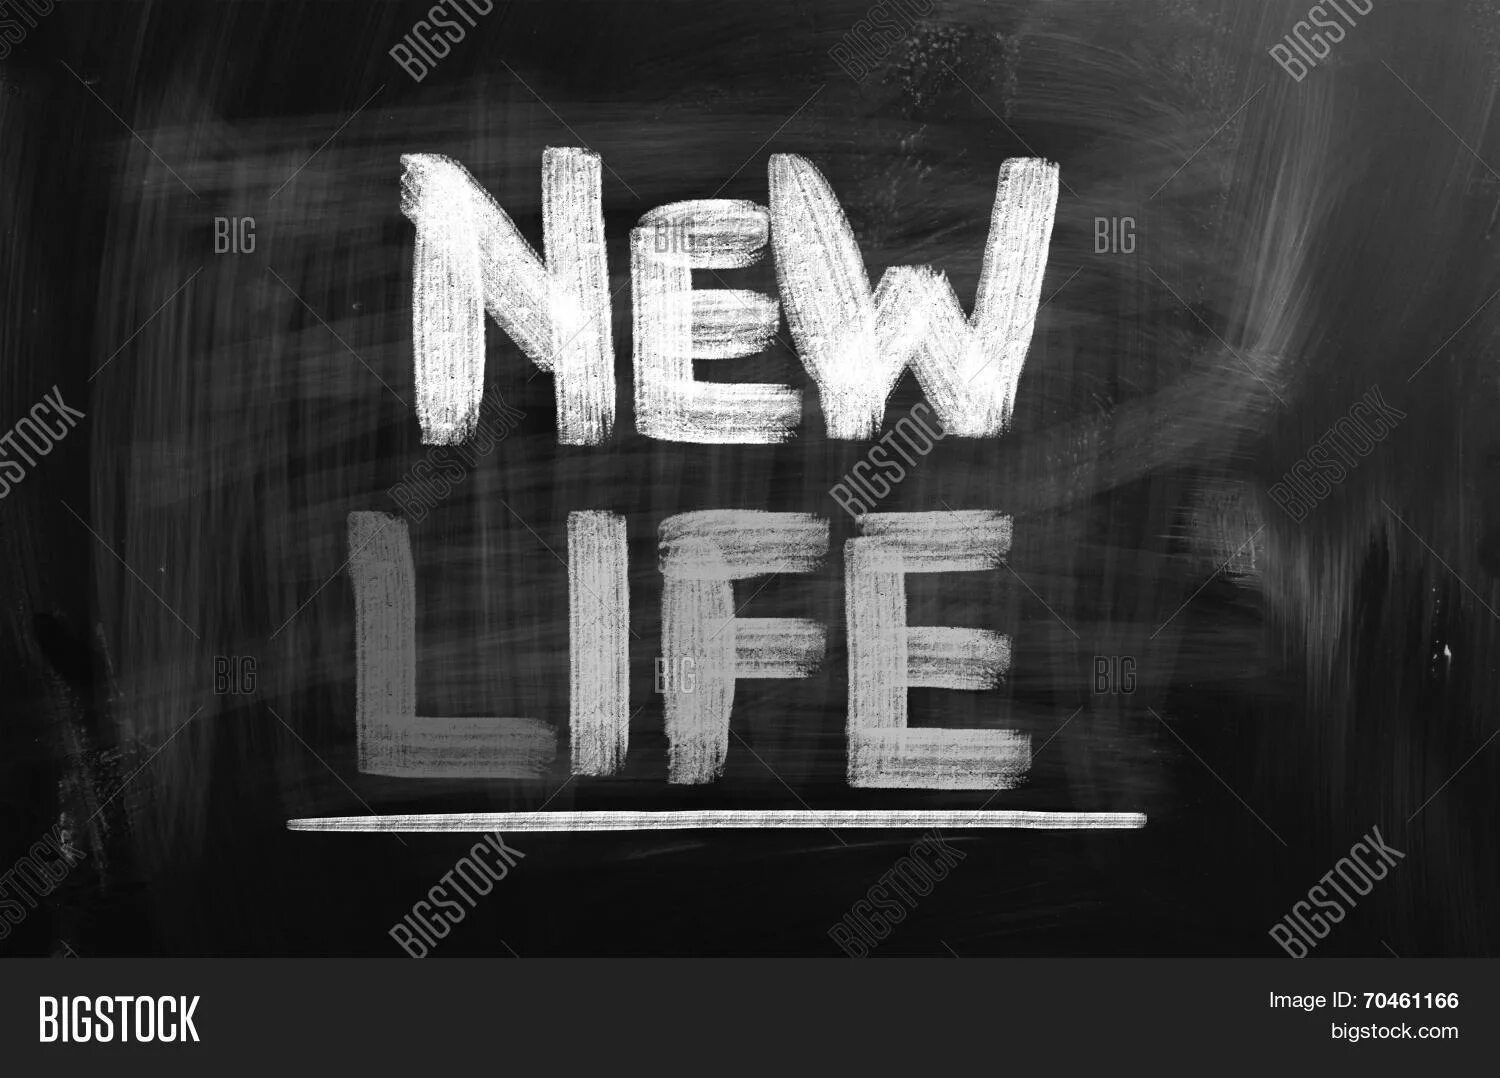 New life на русском. The New Life. Картинки лайф Нью. Happy New Life картинки. Надписью New Life фото.